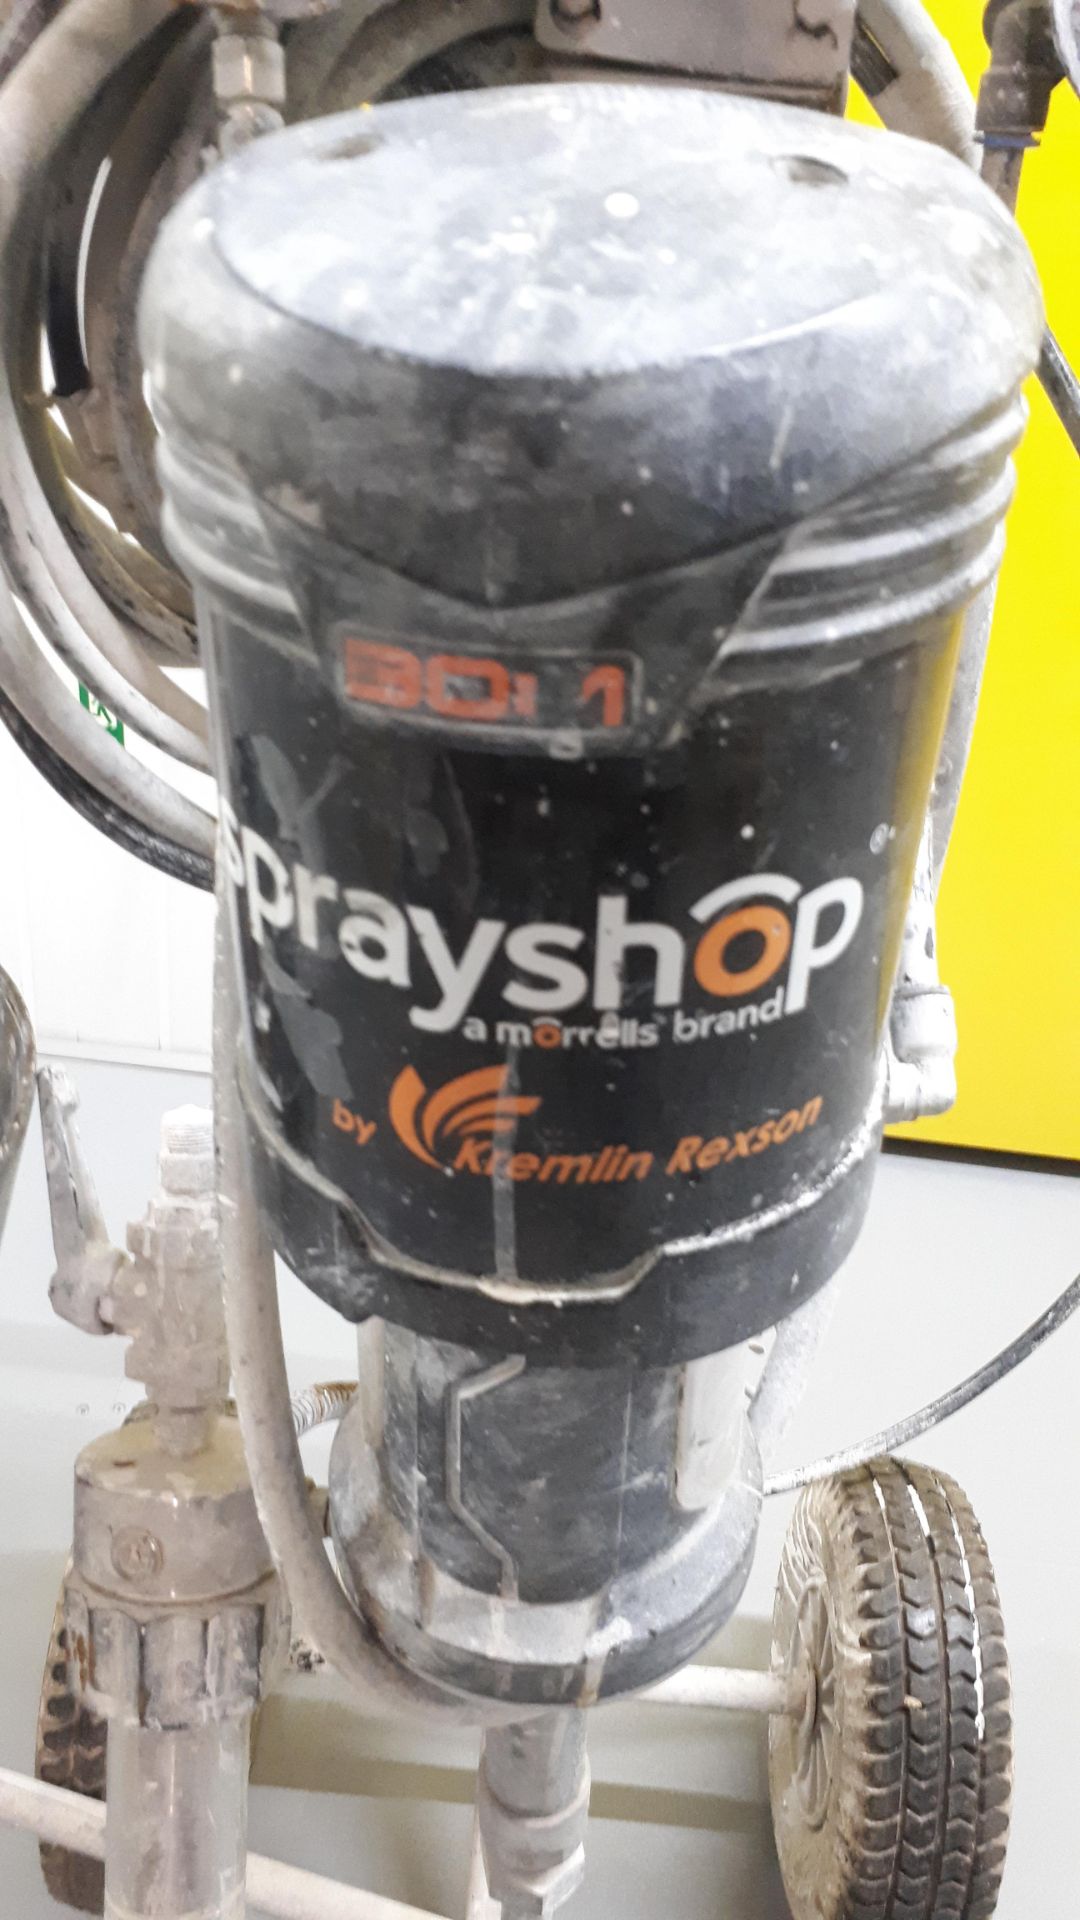 Kremlin Rexson Sprayshop EOS spray pump - Image 2 of 4